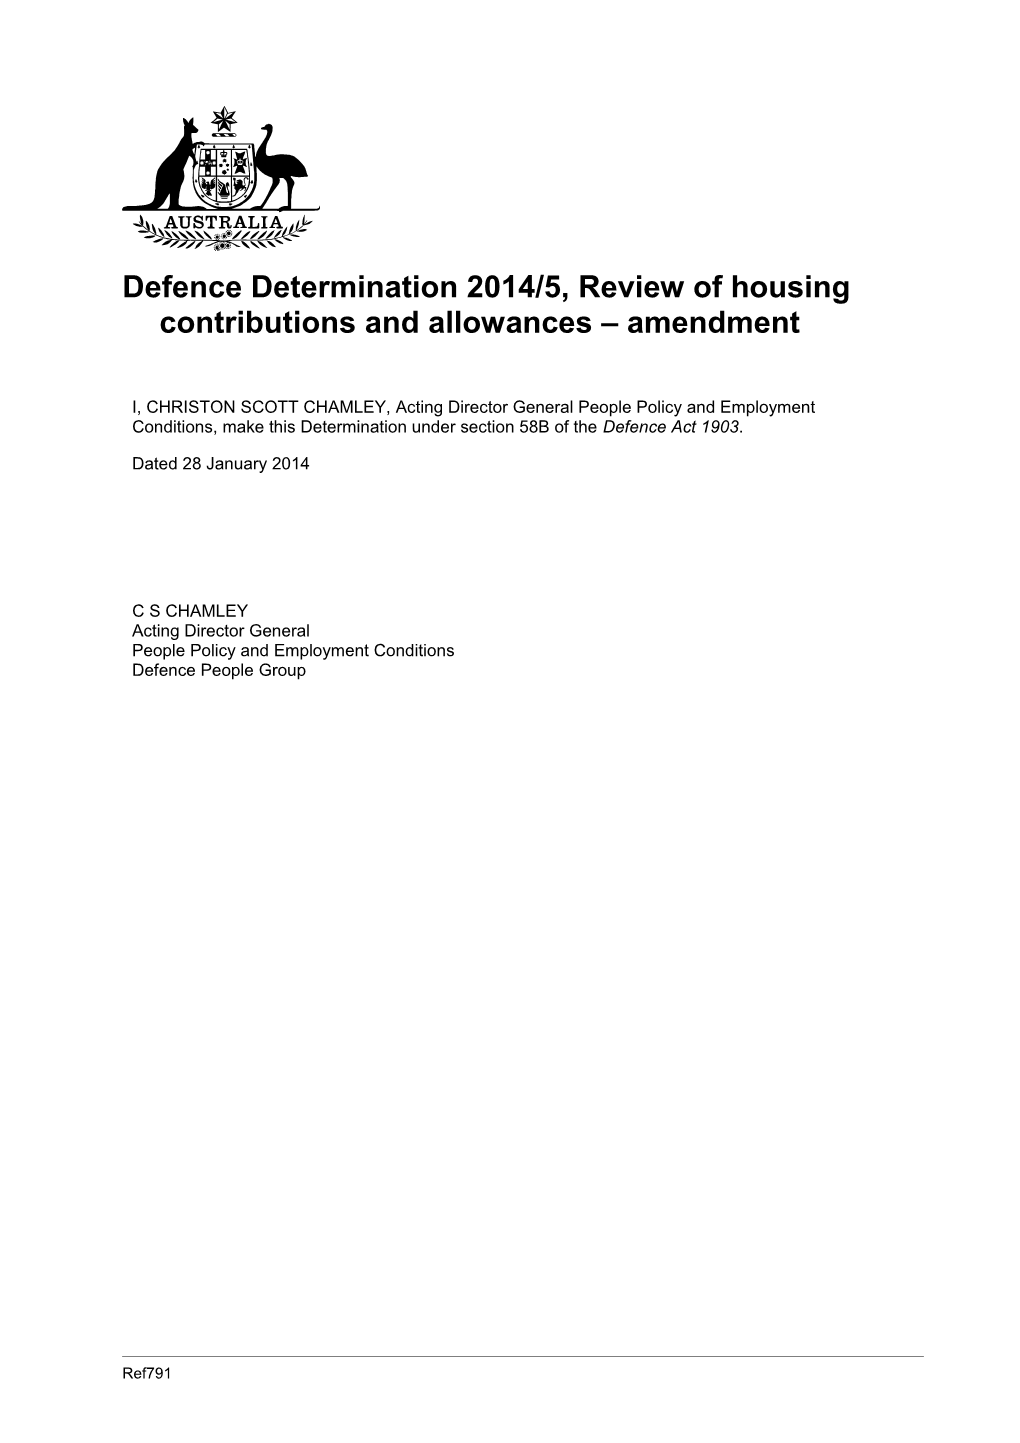 Defence Determination 2014/5, Review of Housing Contributions and Allowances Amendment